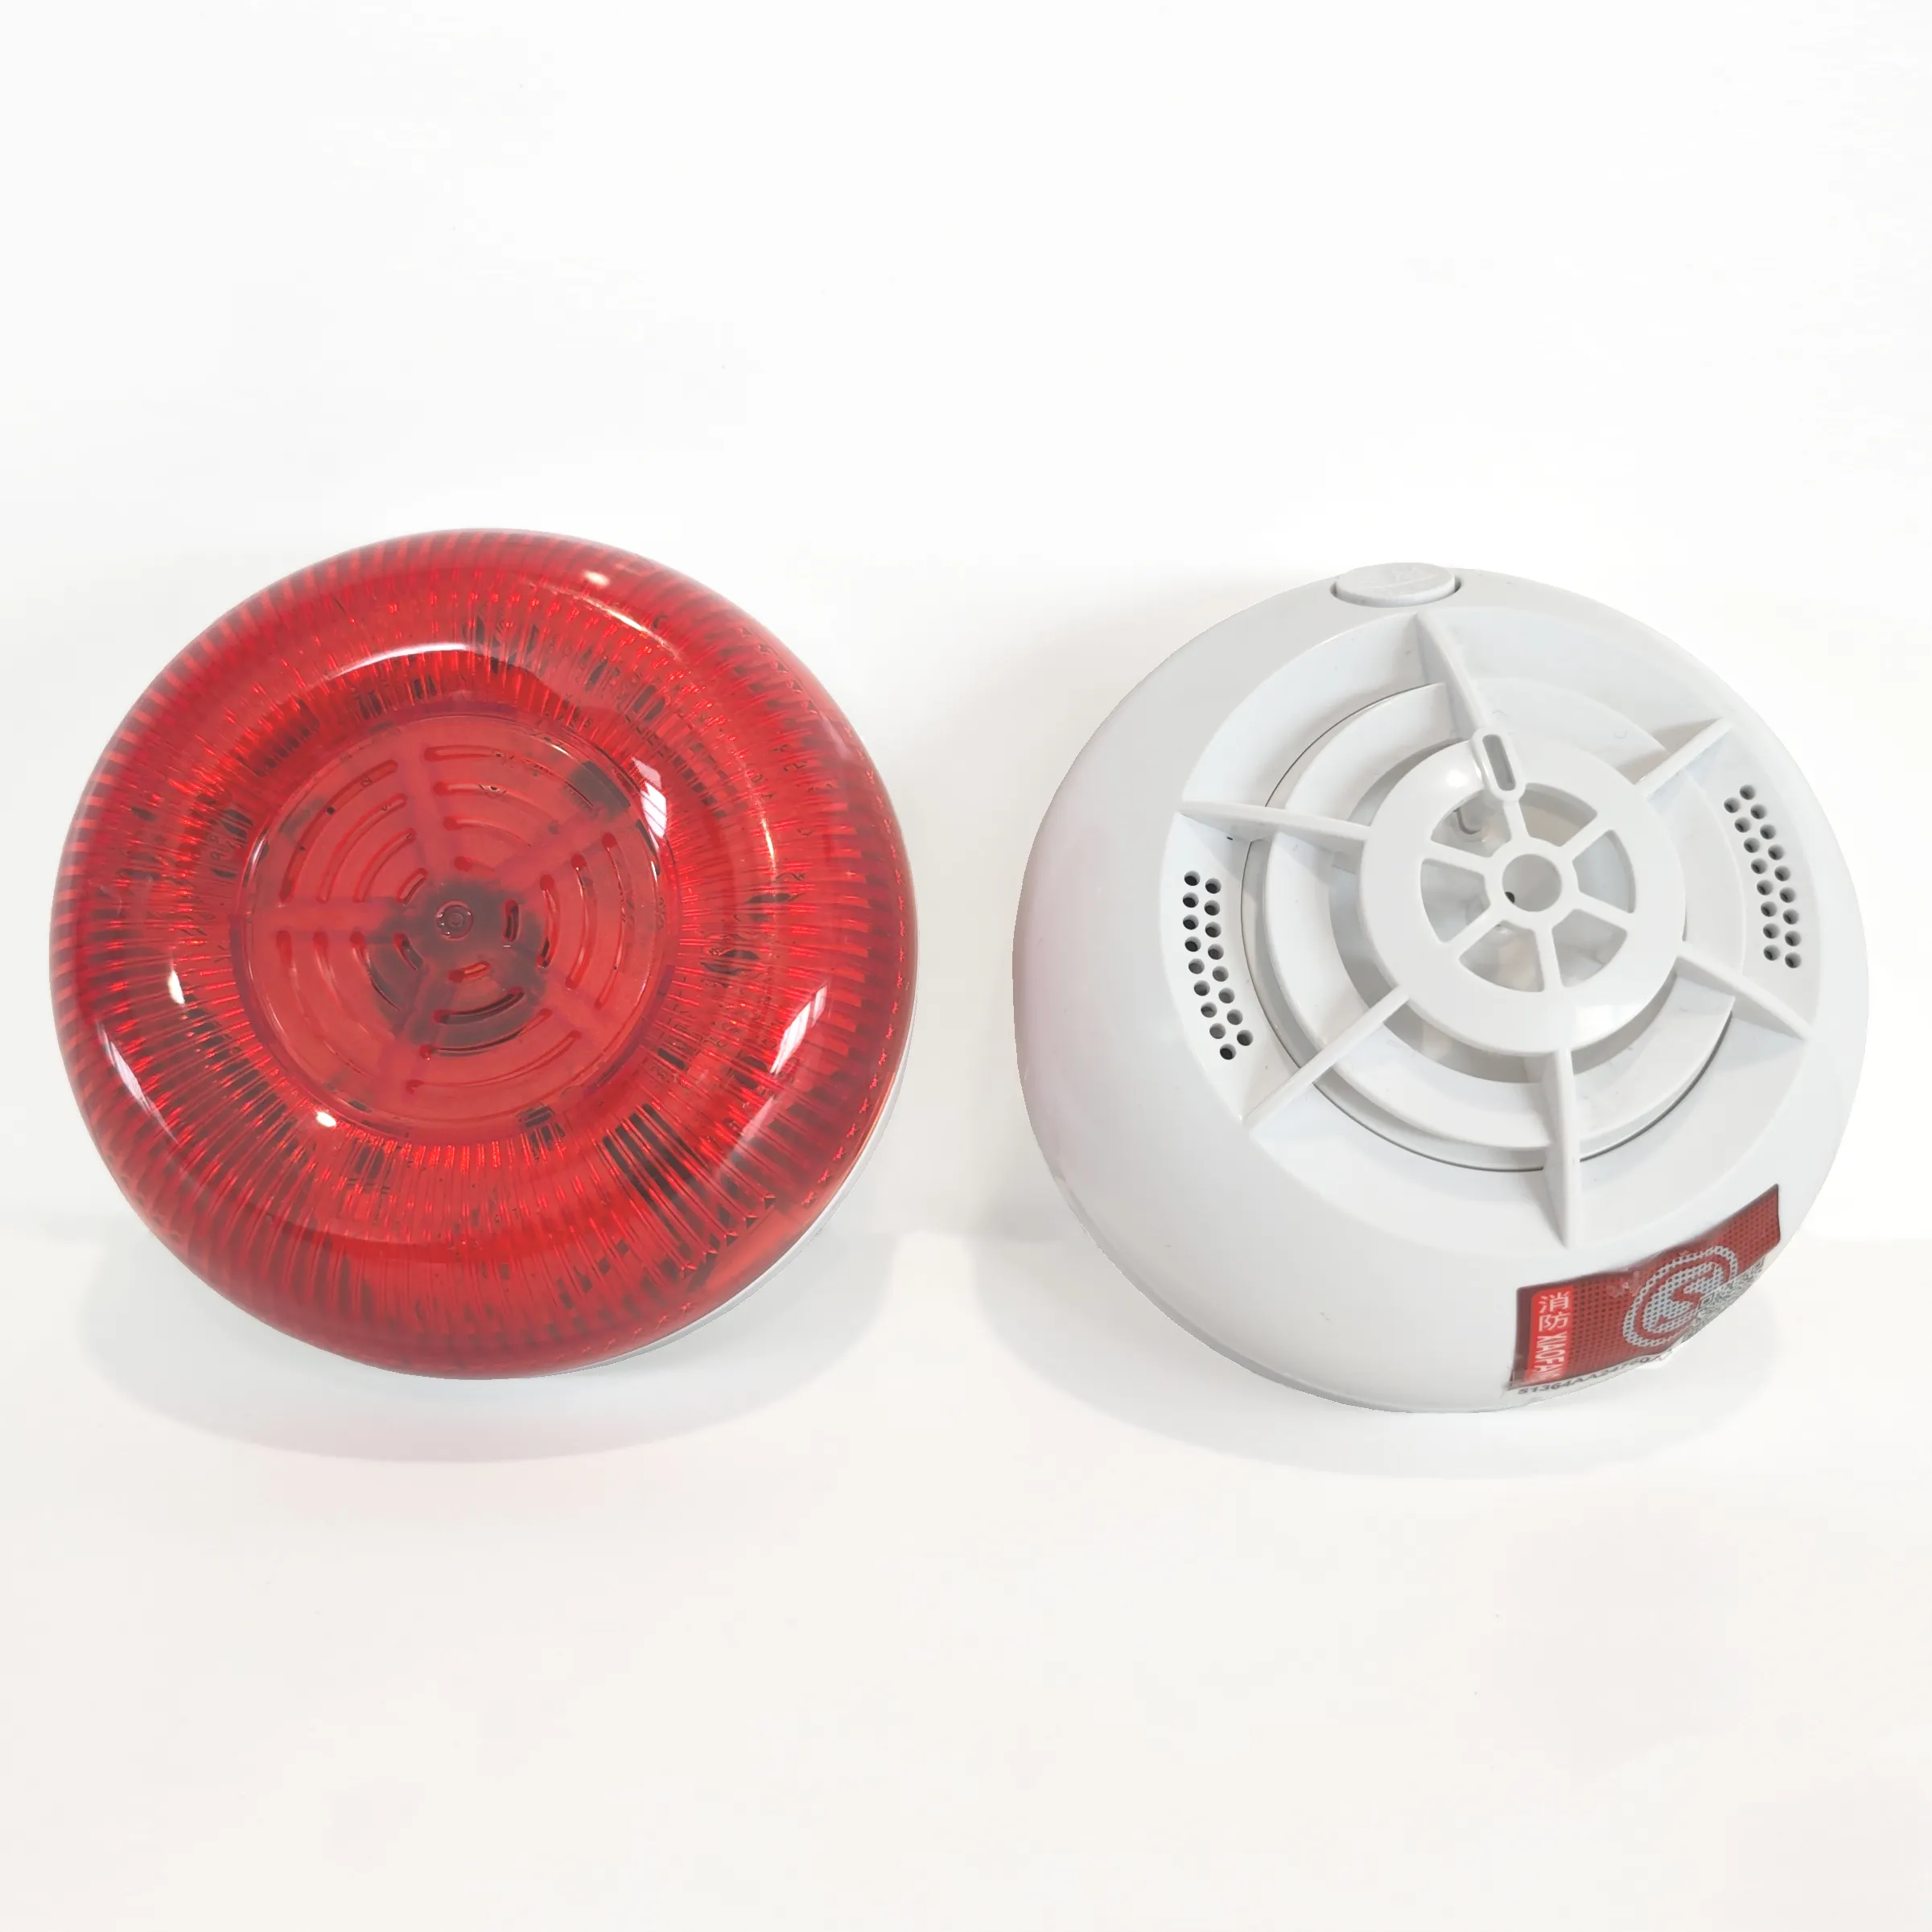 Tanda TX3309 Souder Strobe Intelligent Fire Alarm System alarme sem fio Fire Safety Equipment